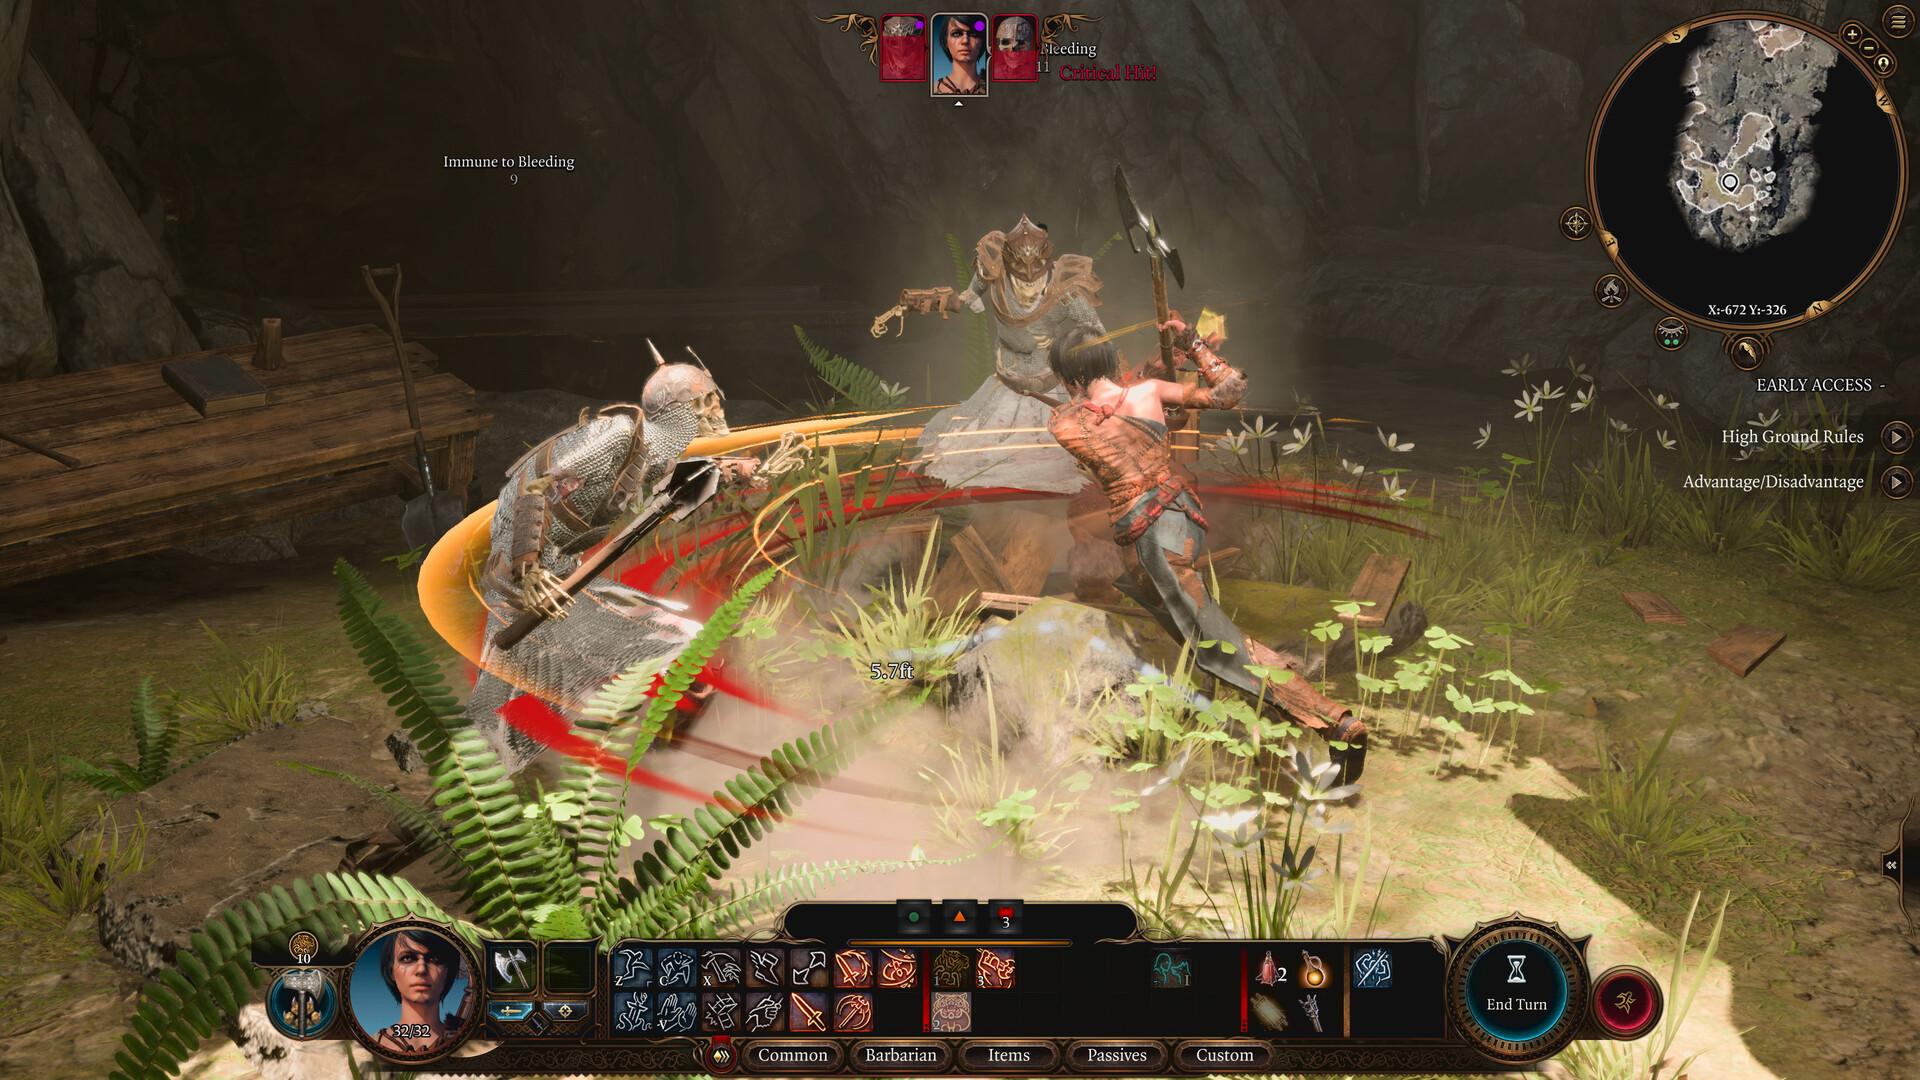 Screenshot №12 from game Baldur's Gate 3